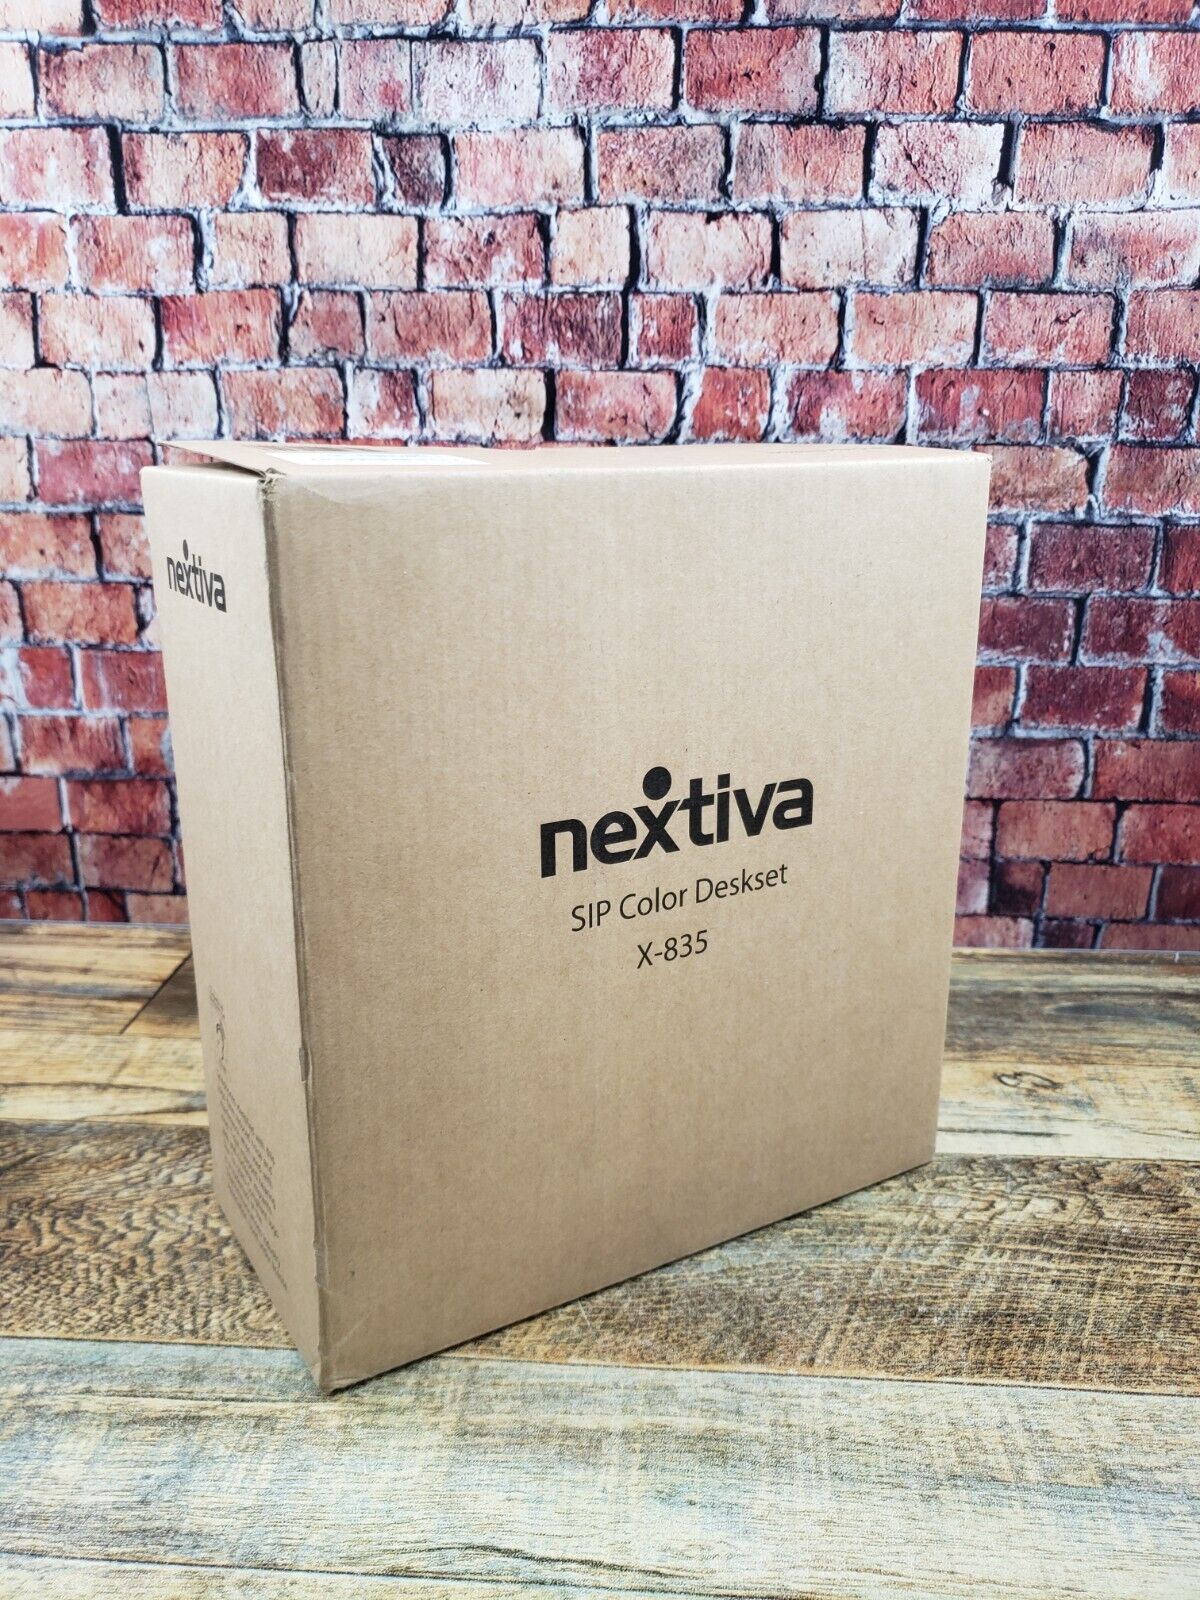 Nextiva X-835 SIP Color Deskset Phone VoIP USB Ethernet - Brand New